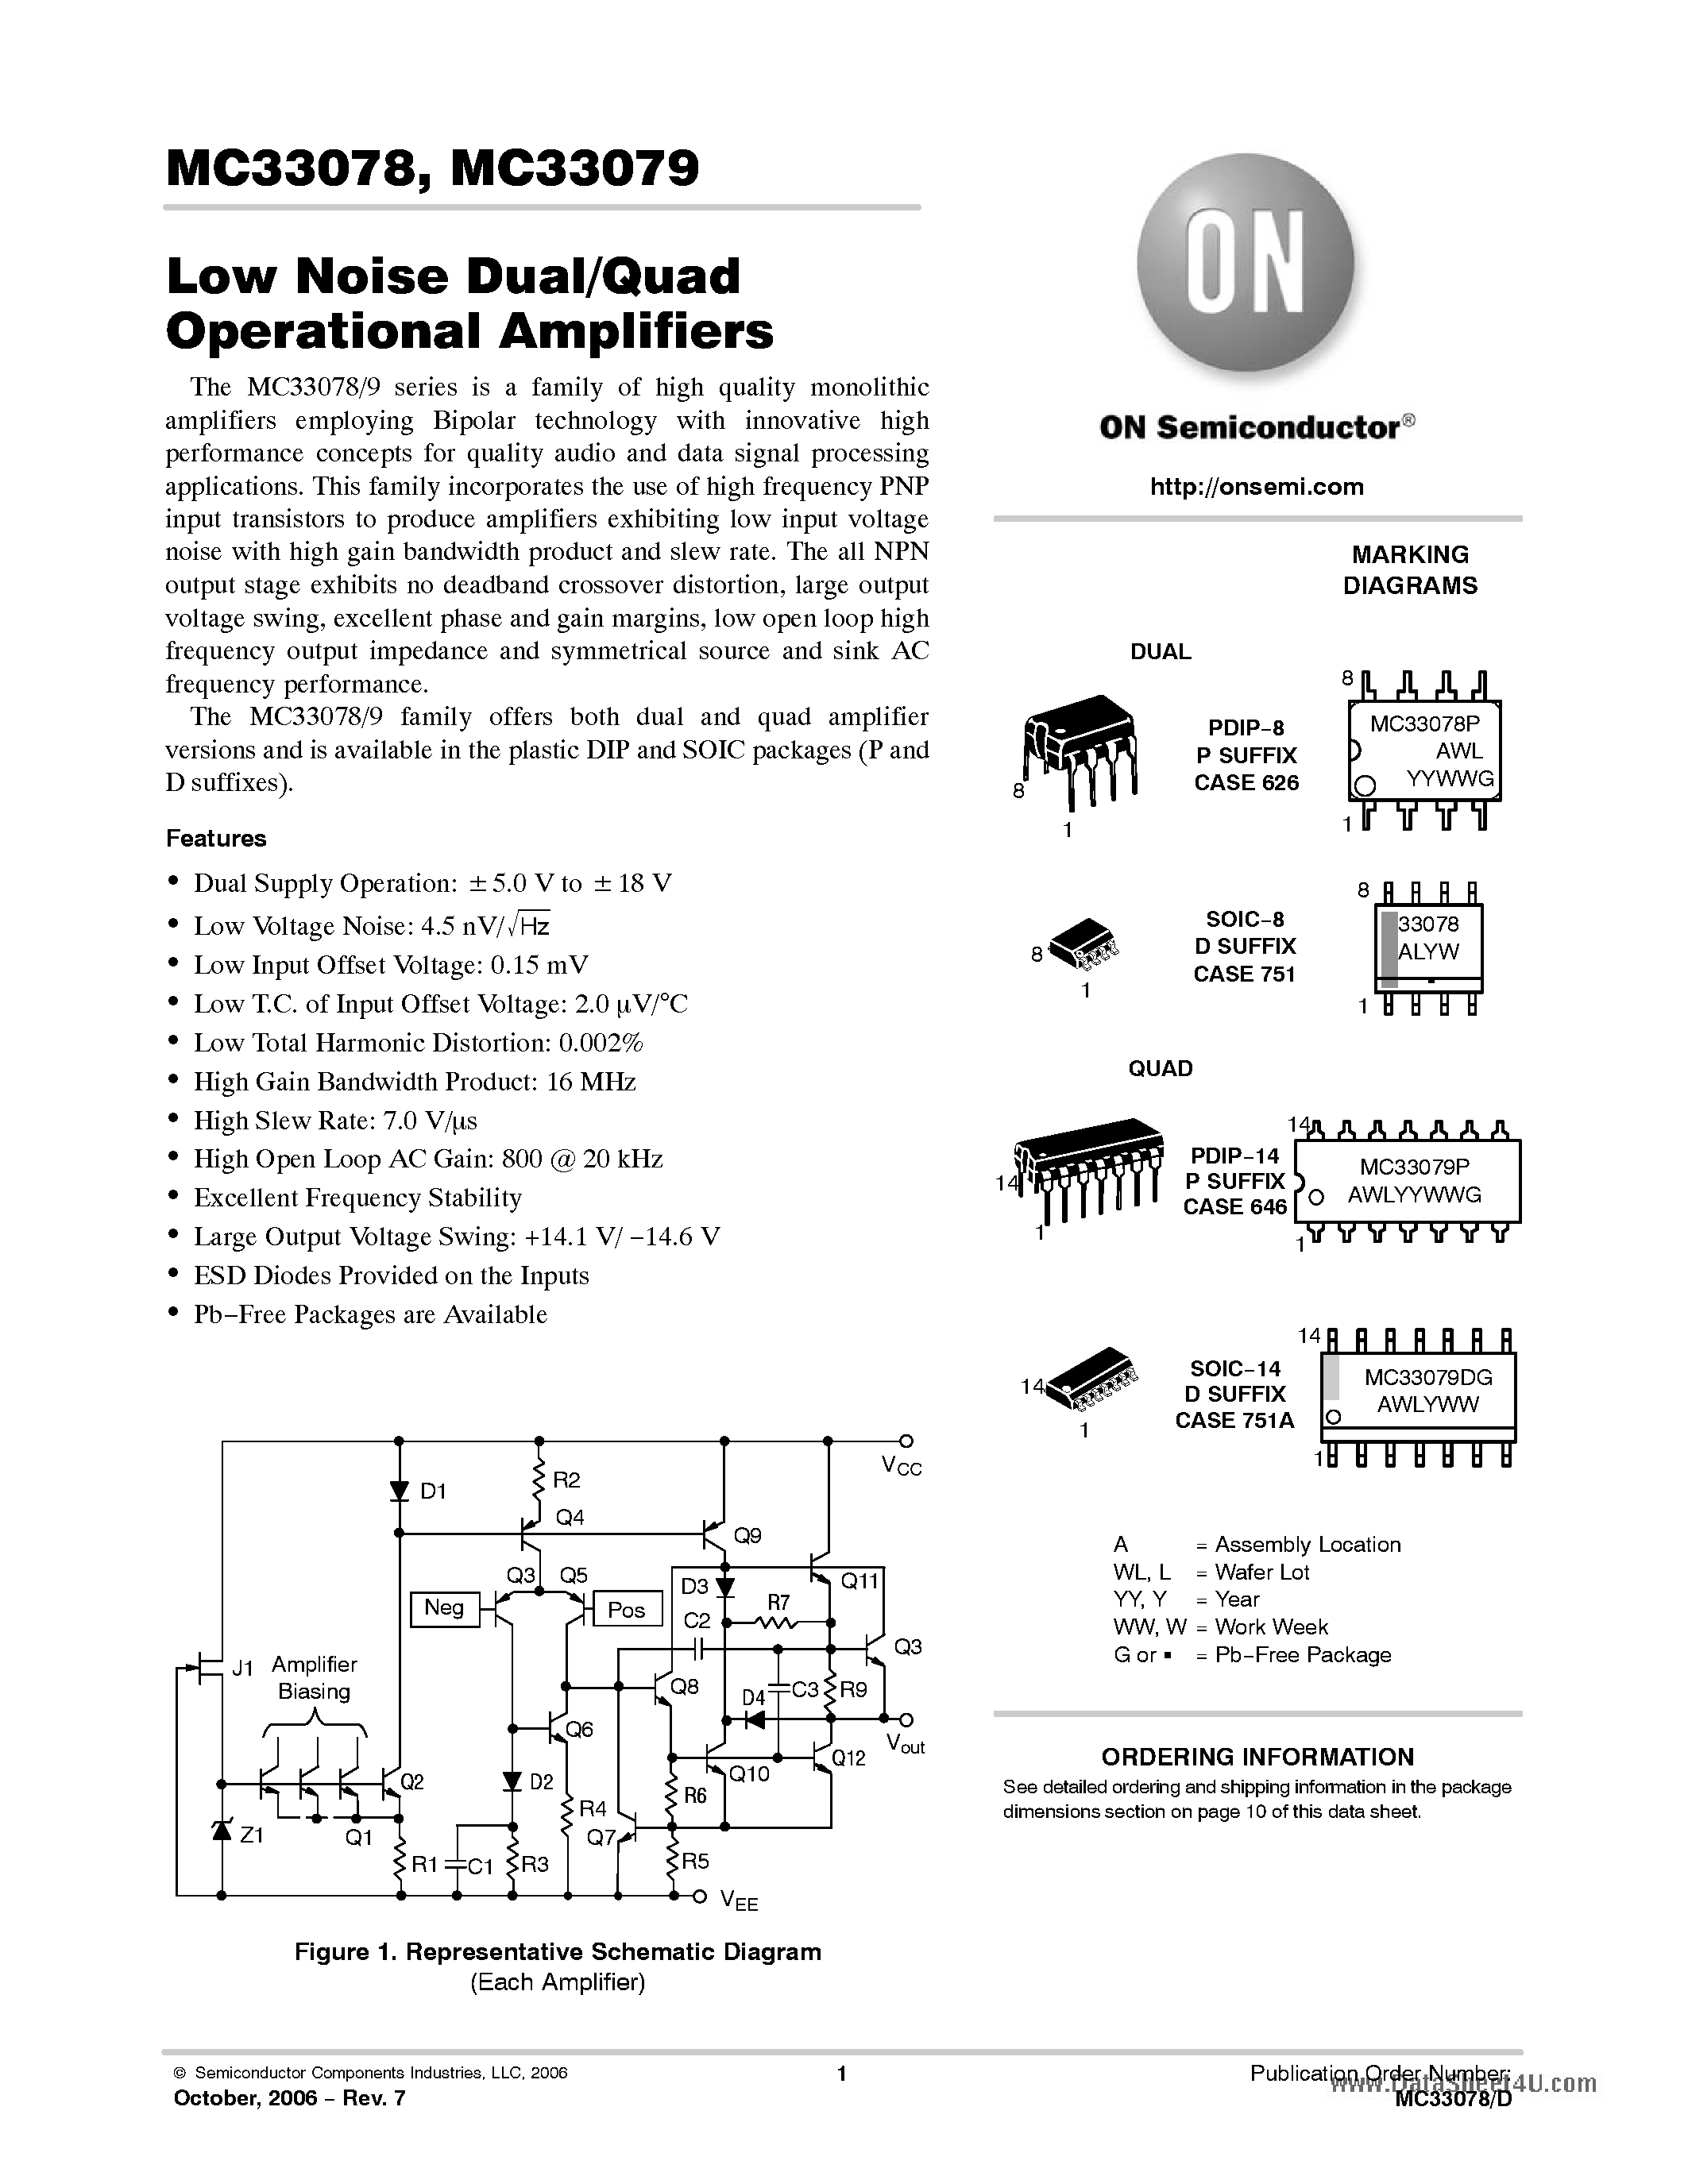 Datasheet MC33078 - (MC33078 / MC33079) Low Noise Dual/Quad Operational Amplifiers page 1